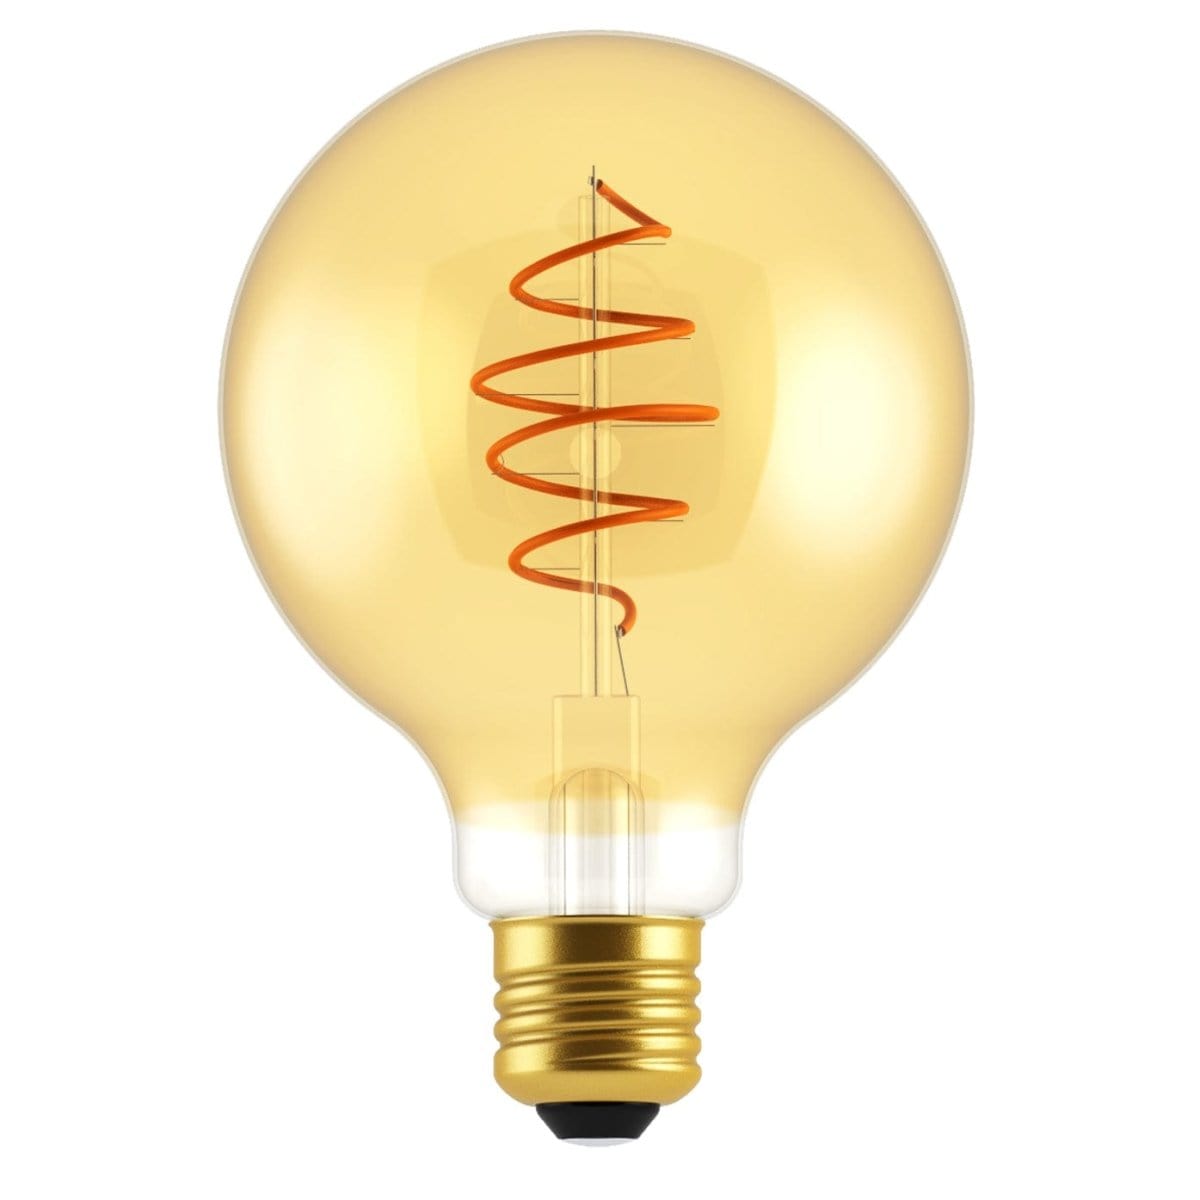 Heavenly Chandeliers Light Bulbs Decorative E27 G125 light bulb, warm golden glow